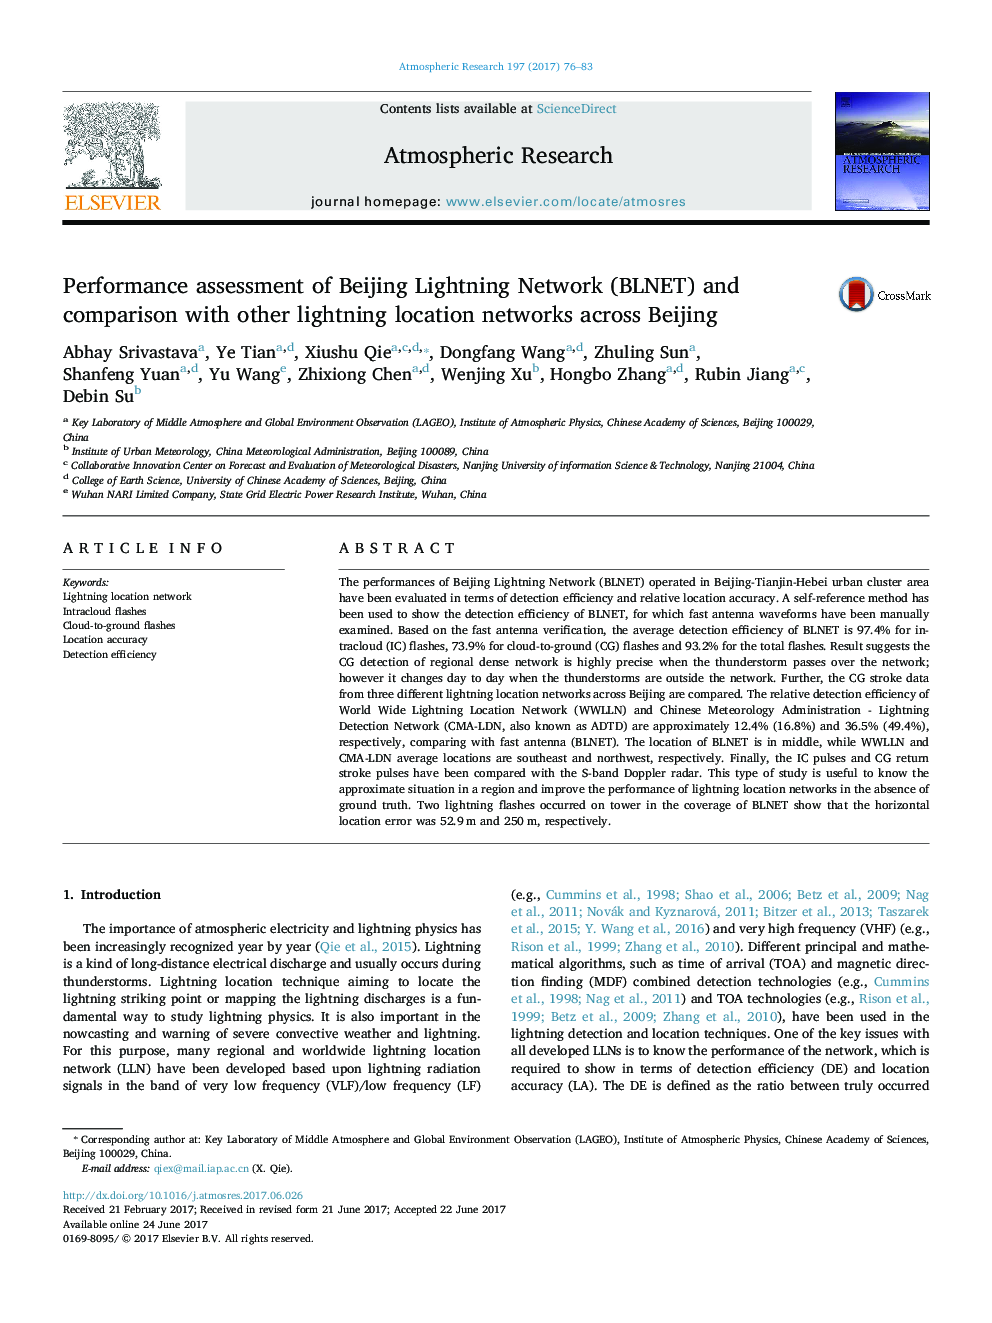 Performance assessment of Beijing Lightning Network (BLNET) and comparison with other lightning location networks across Beijing